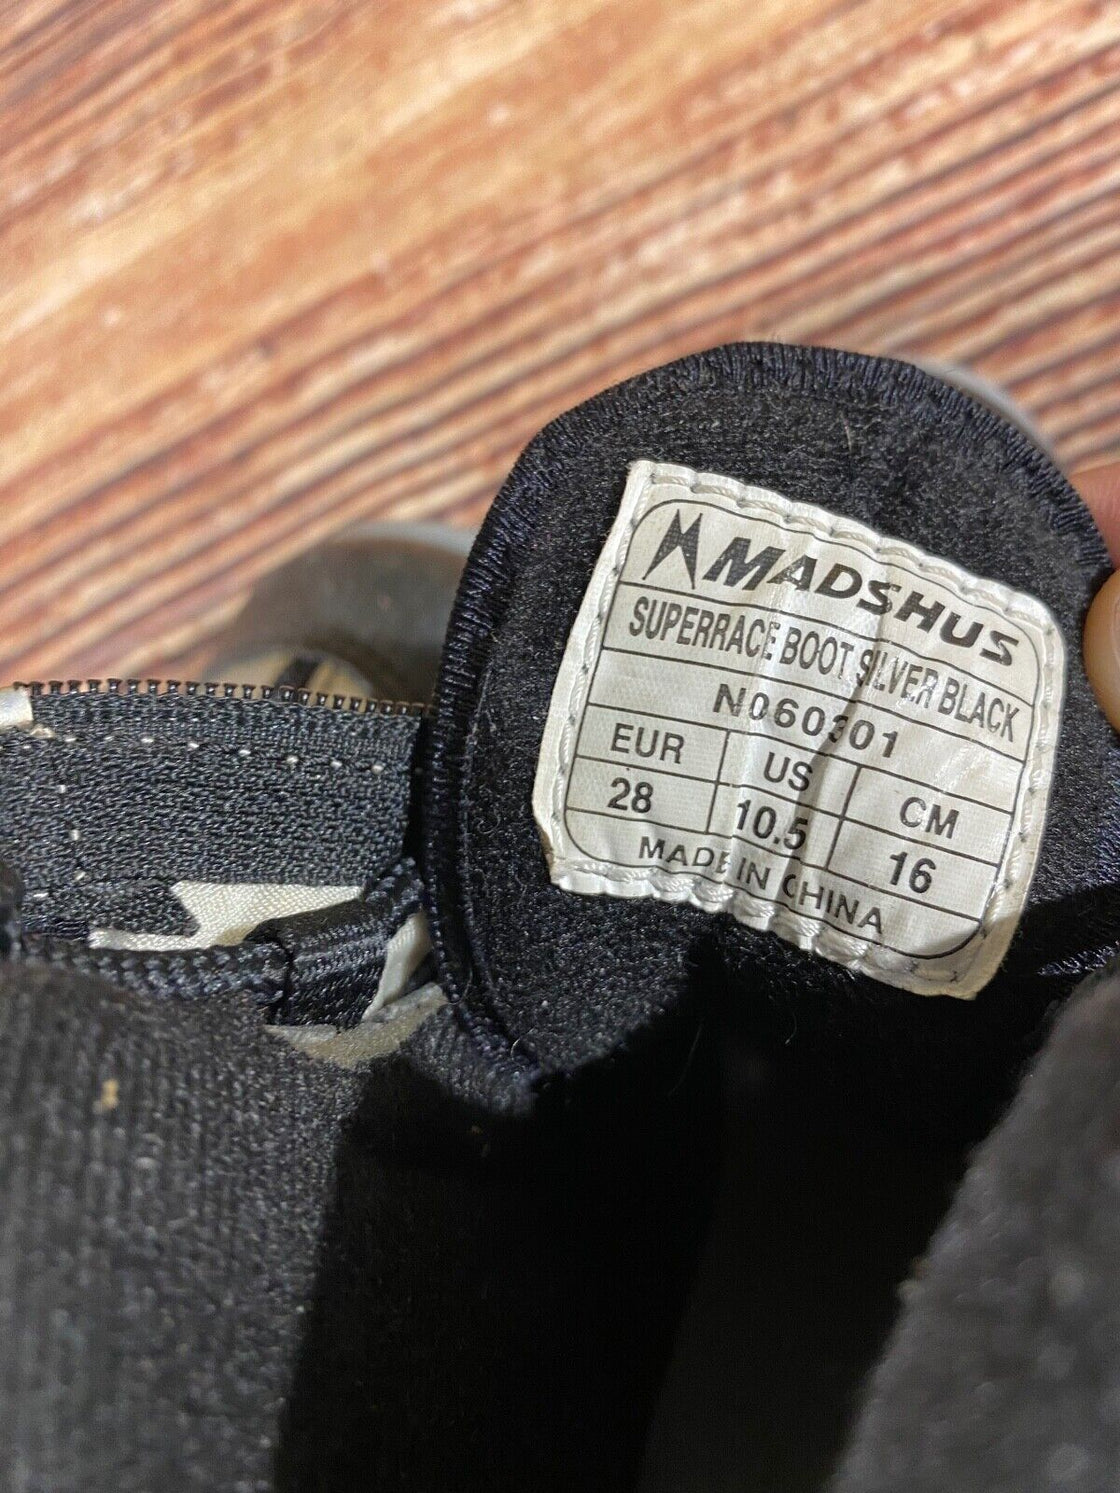 Madshus Super Race Kids Nordic Cross Country Ski Boots Size EU28 US10.5 NNN M329